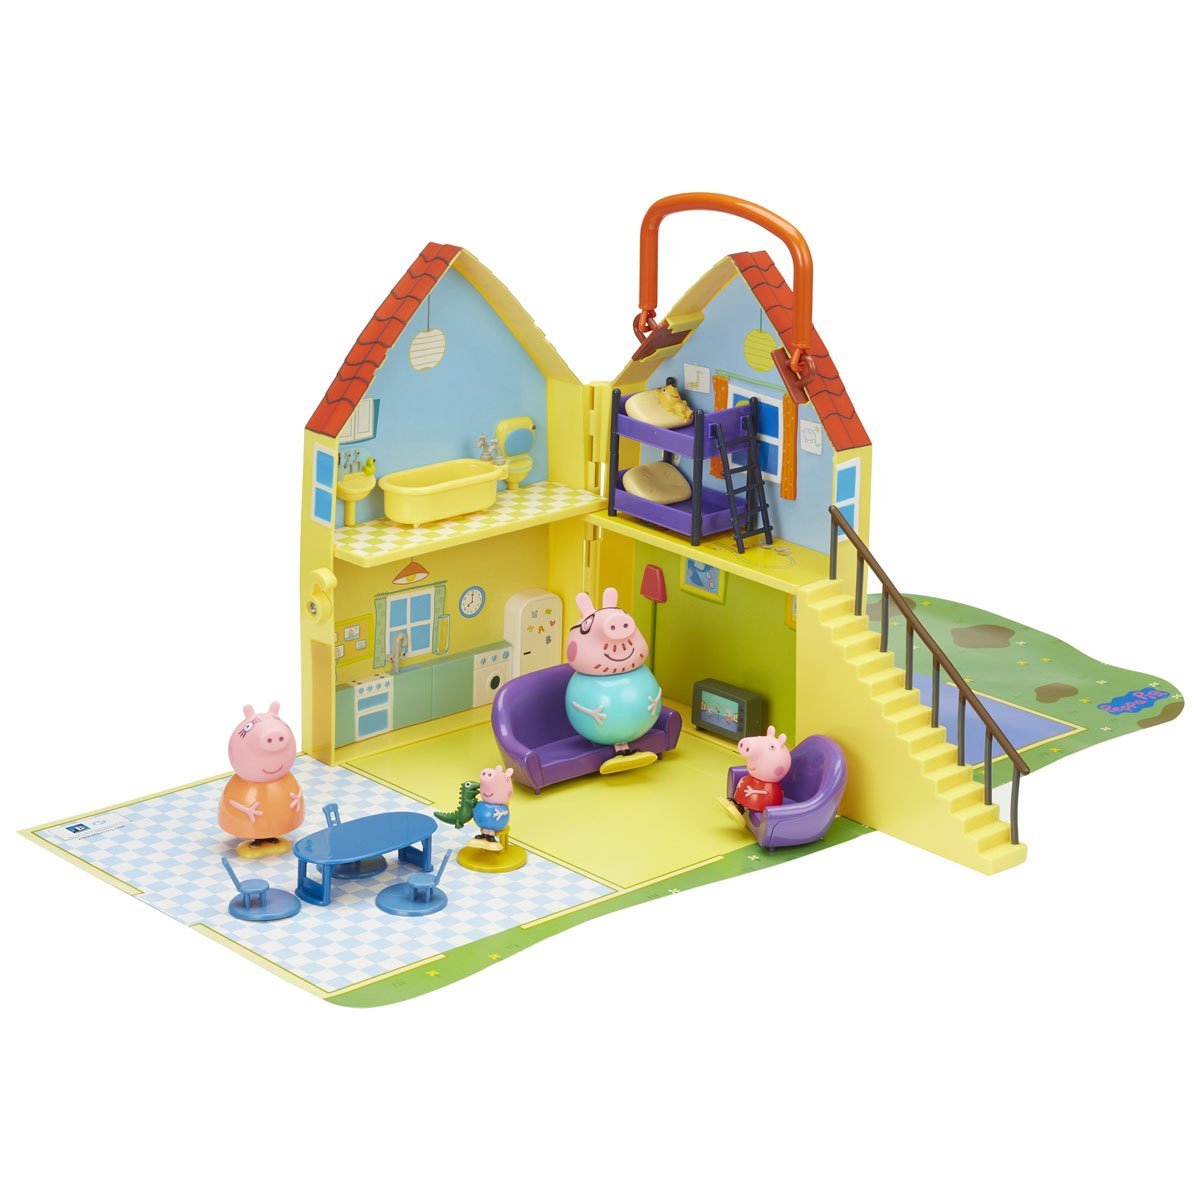 Peppa Pig Casa con 4 Figuras Bandai